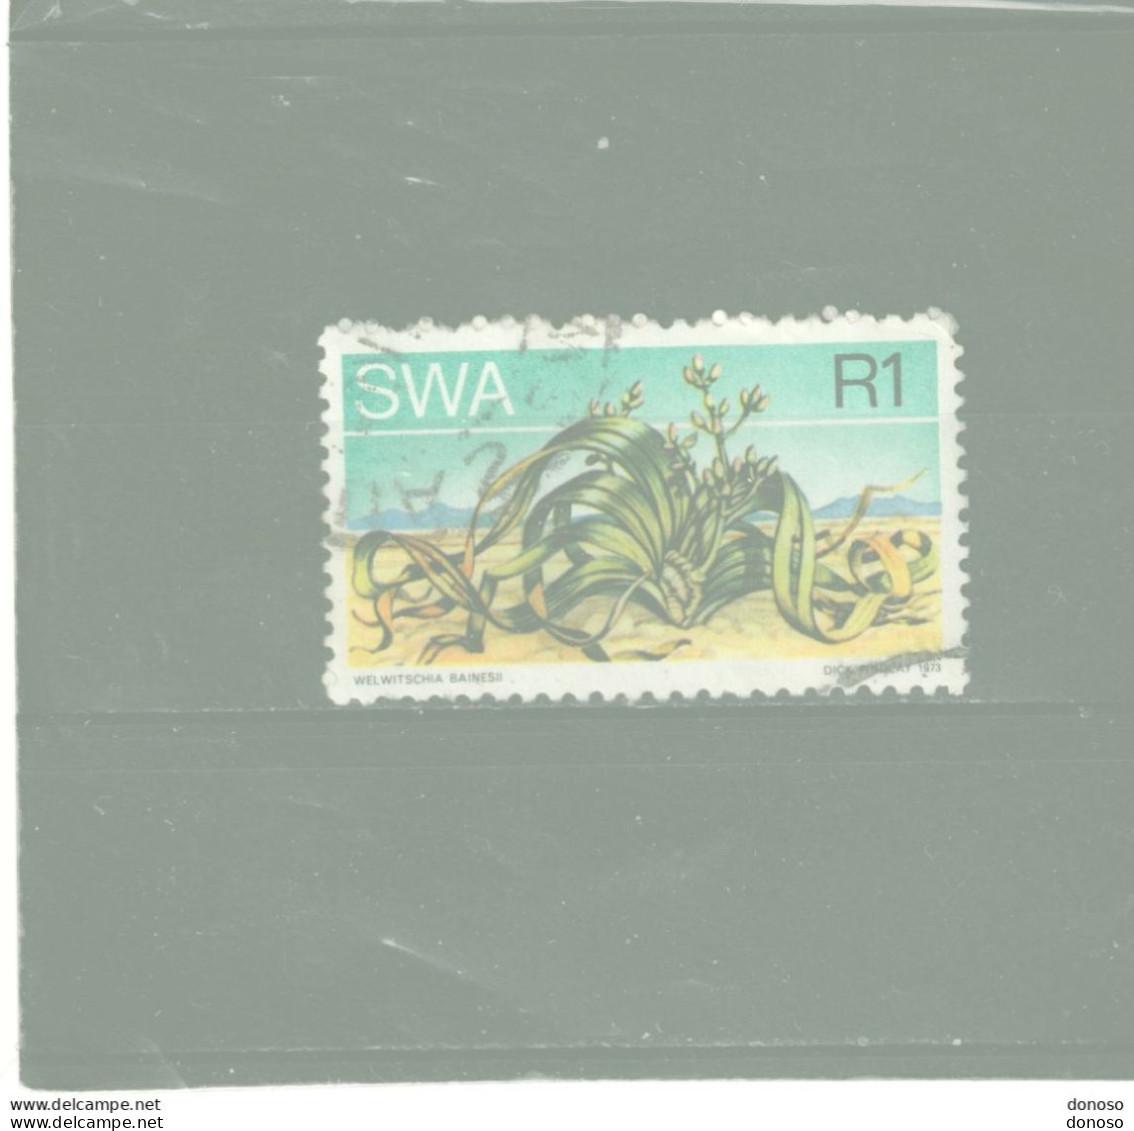 SWA SUD OUEST AFRICAIN 1973 Welwischia Yvert 331 Oblitéré Cote Yv 6,50 Euros - Südwestafrika (1923-1990)